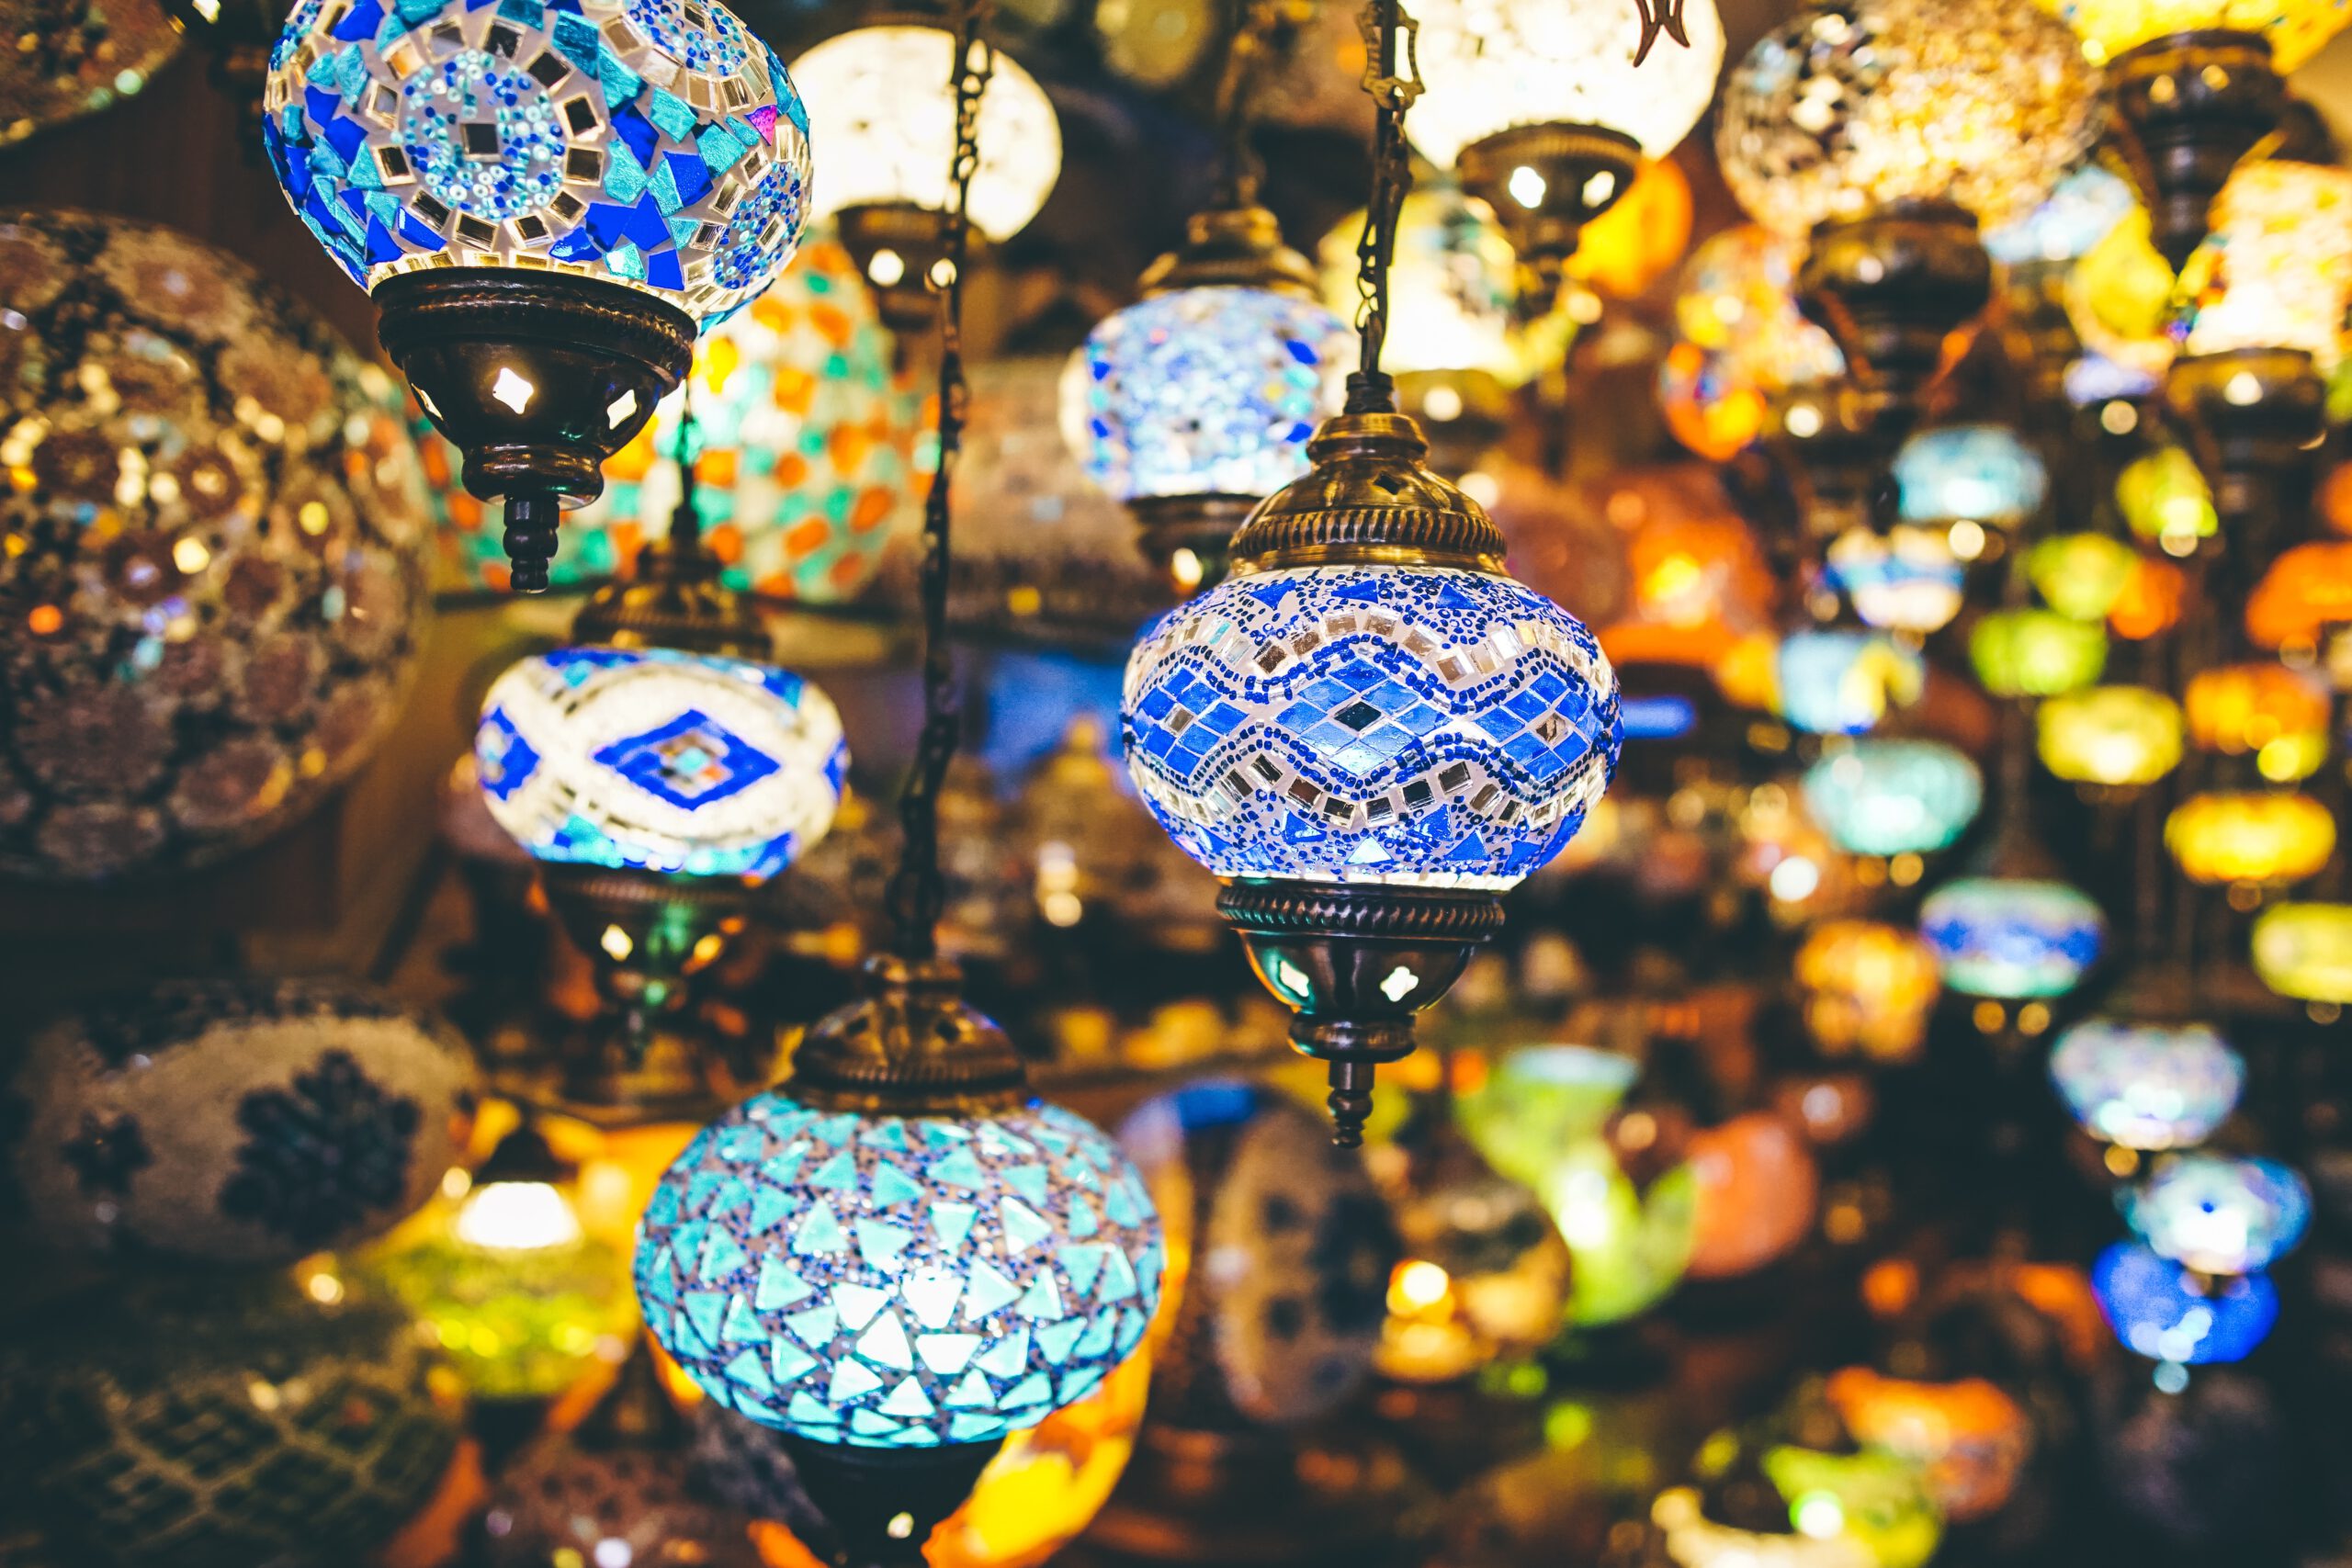 Dubai Customs and Traditions - Ramadan lamps